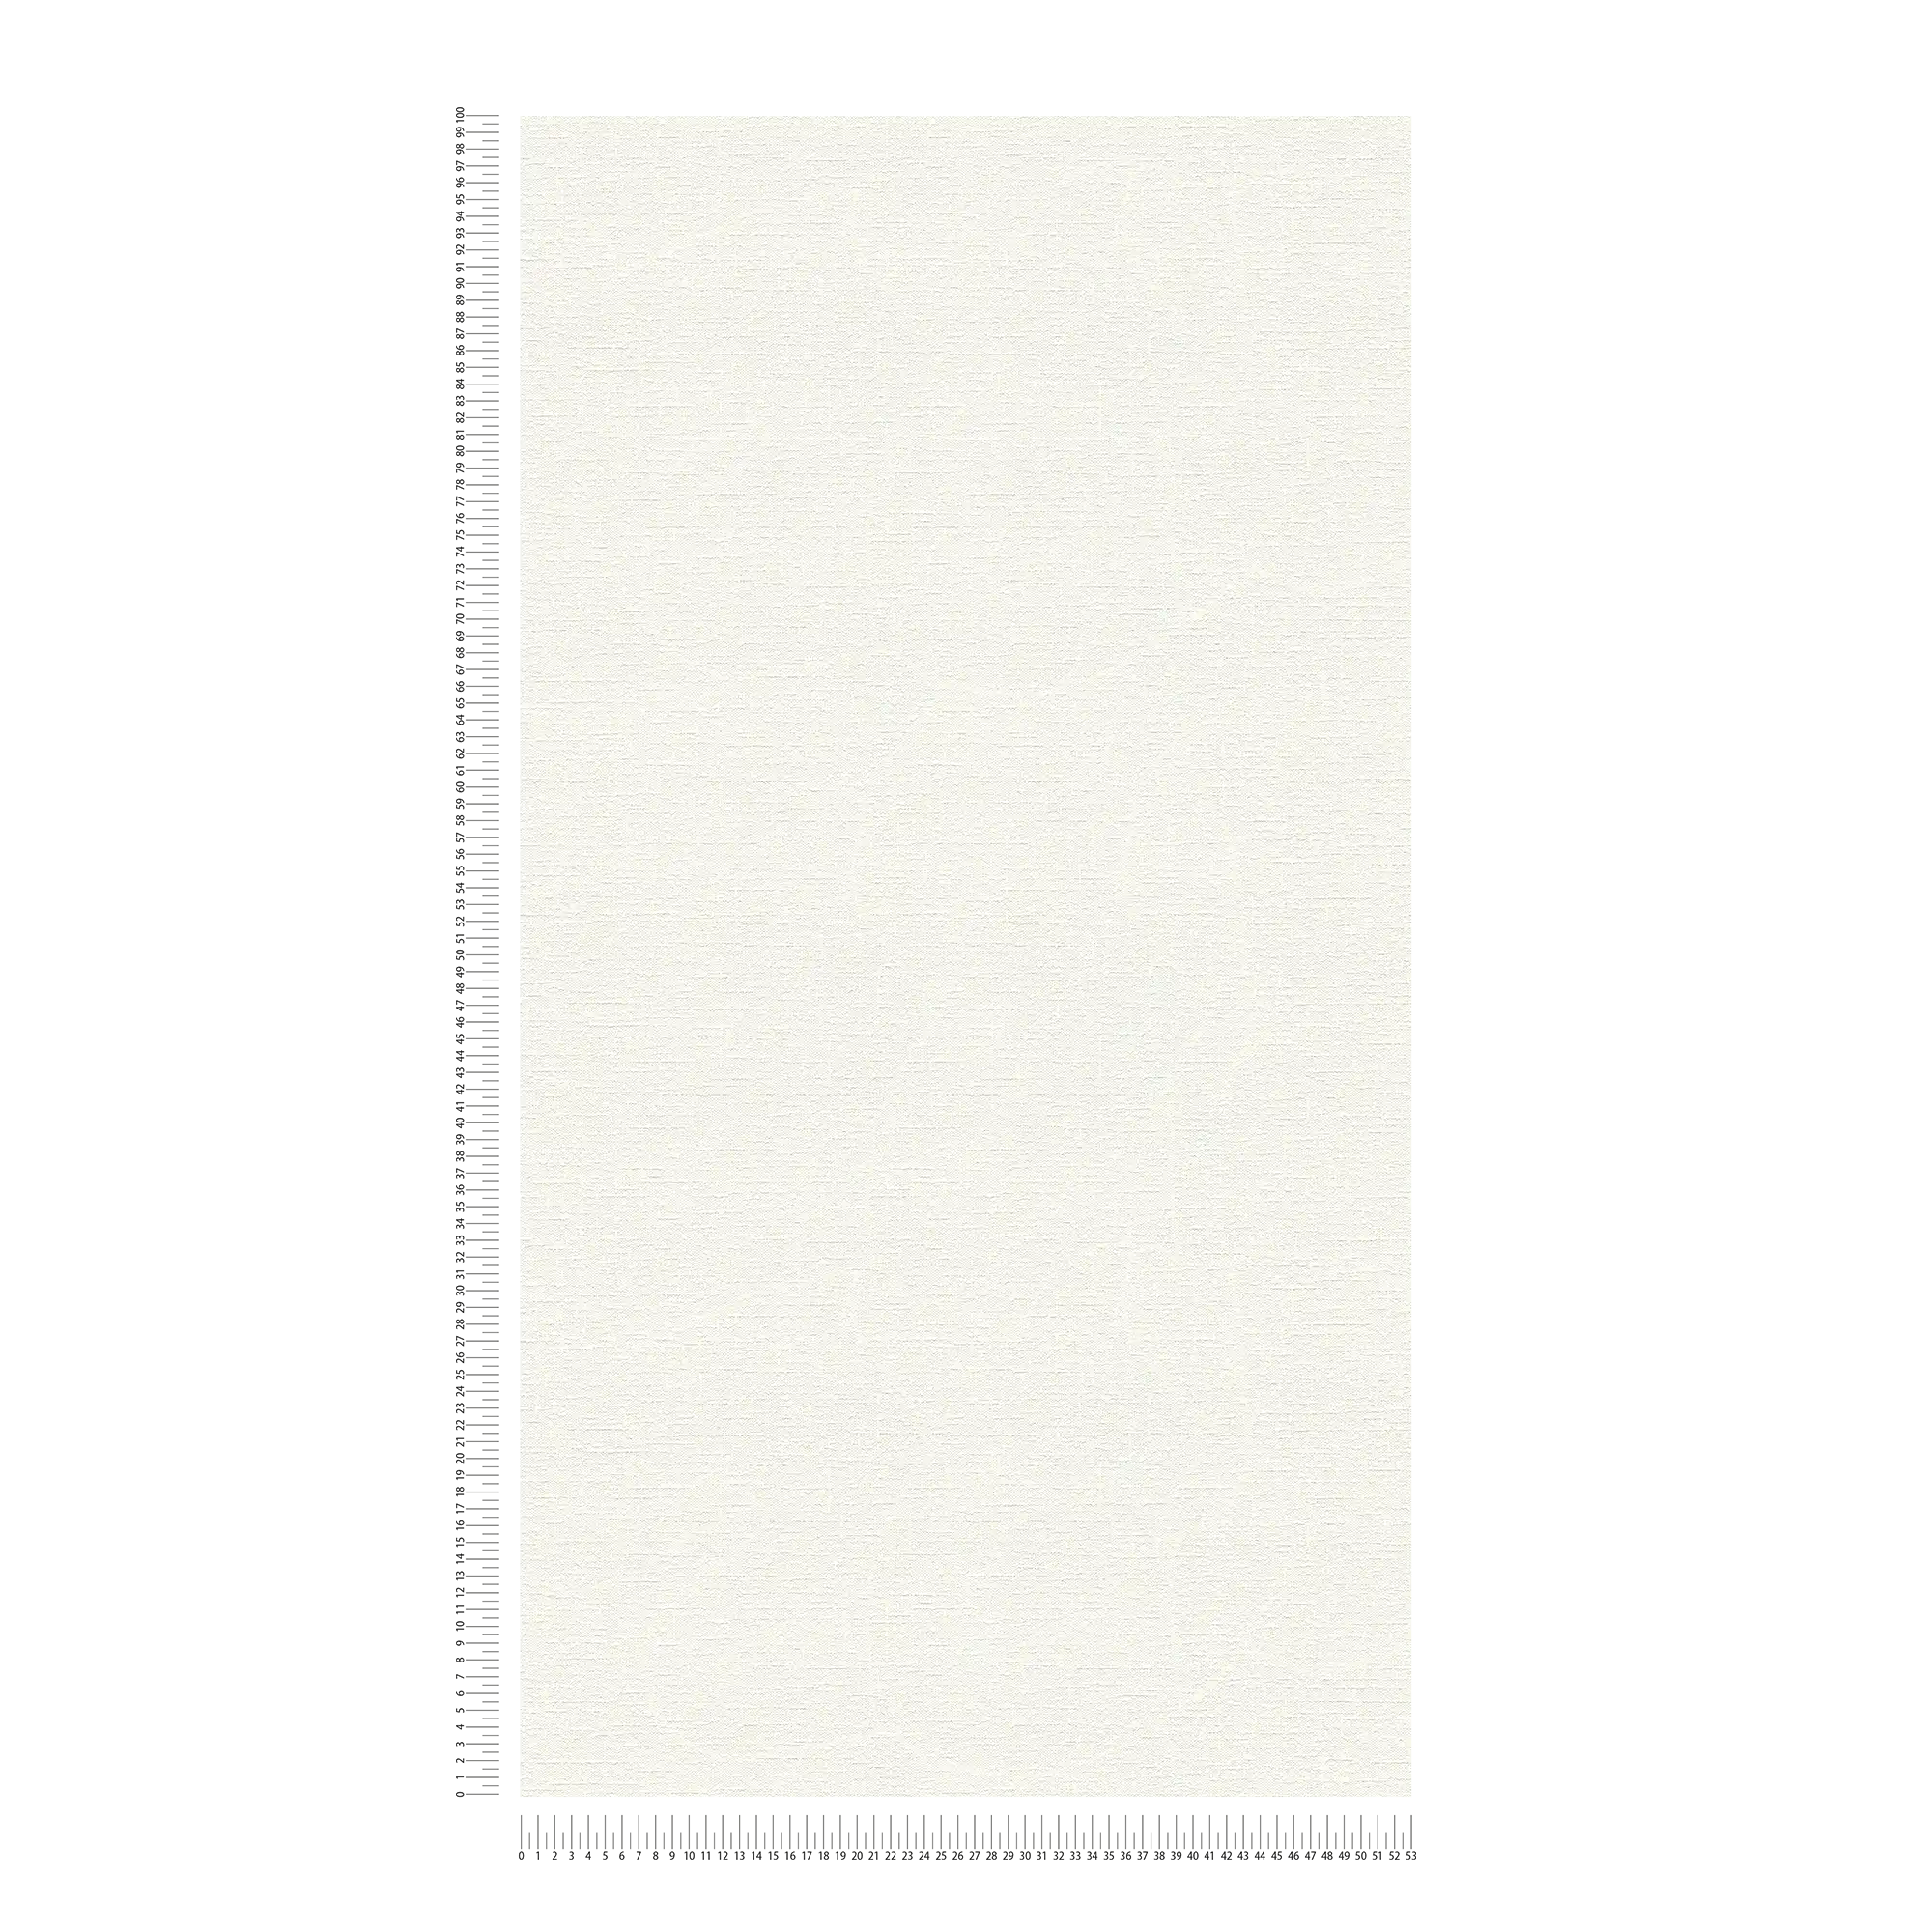             Carta da parati bianca in tessuto non tessuto a tinta unita con struttura tessile
        